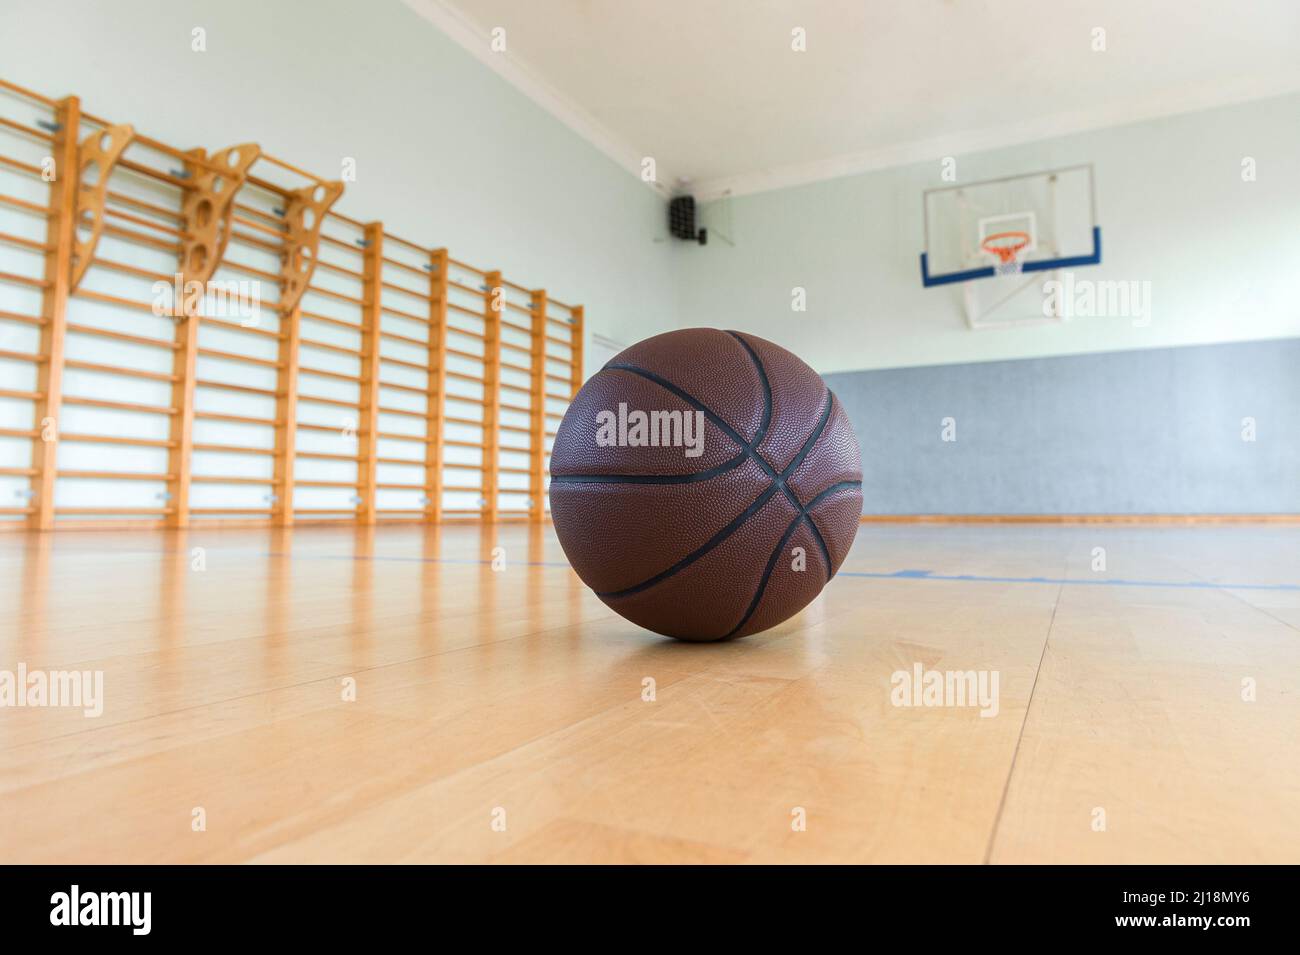 Basketball on hardwood court floor with natural lighting. Horizontal sport theme poster, greeting cards. Stock Photo